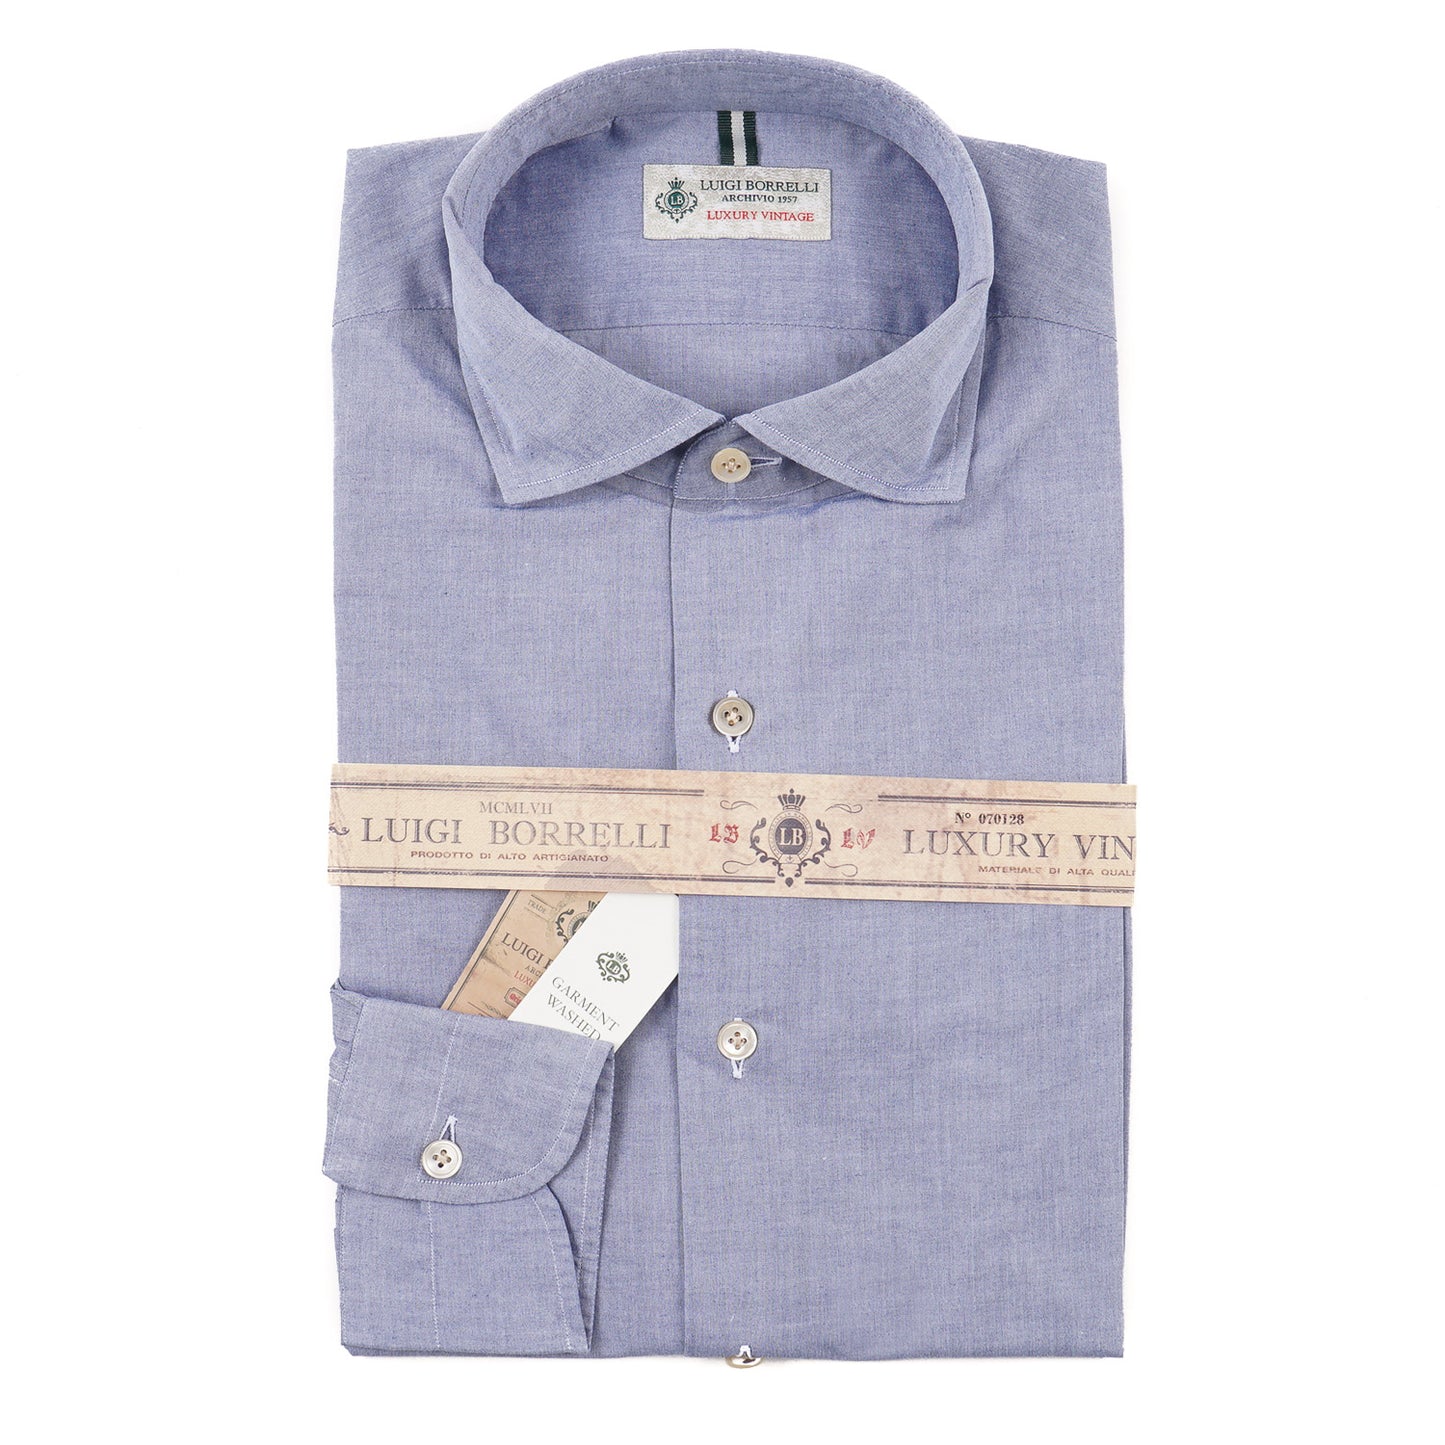 Luigi Borrelli Lightweight Oxford Dress Shirt - Top Shelf Apparel